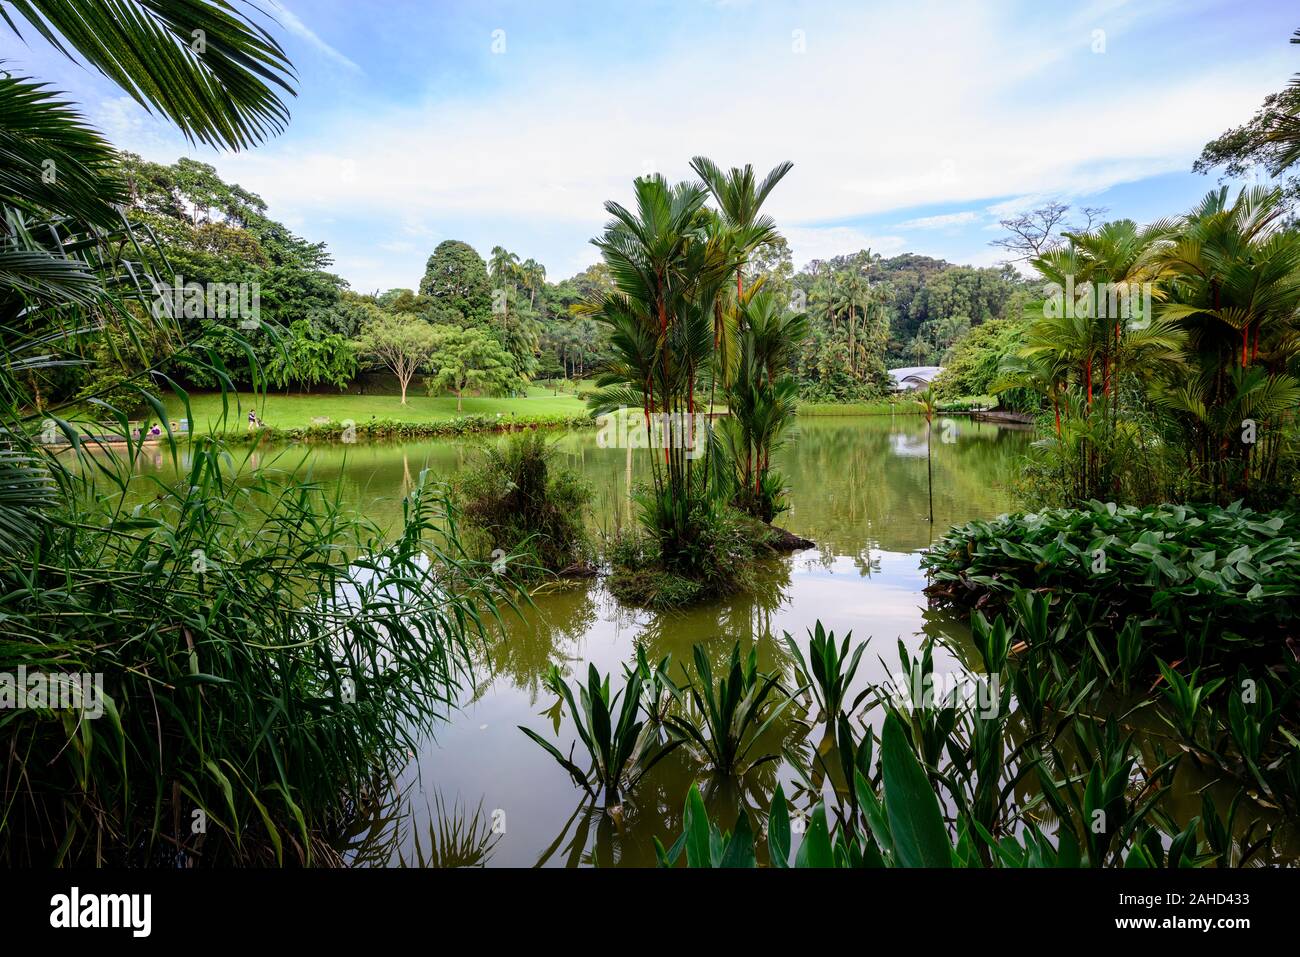 Palm trees, tropical vegetation, artificial lake, park, Singapore Botanic Gardens, Singapore Stock Photo